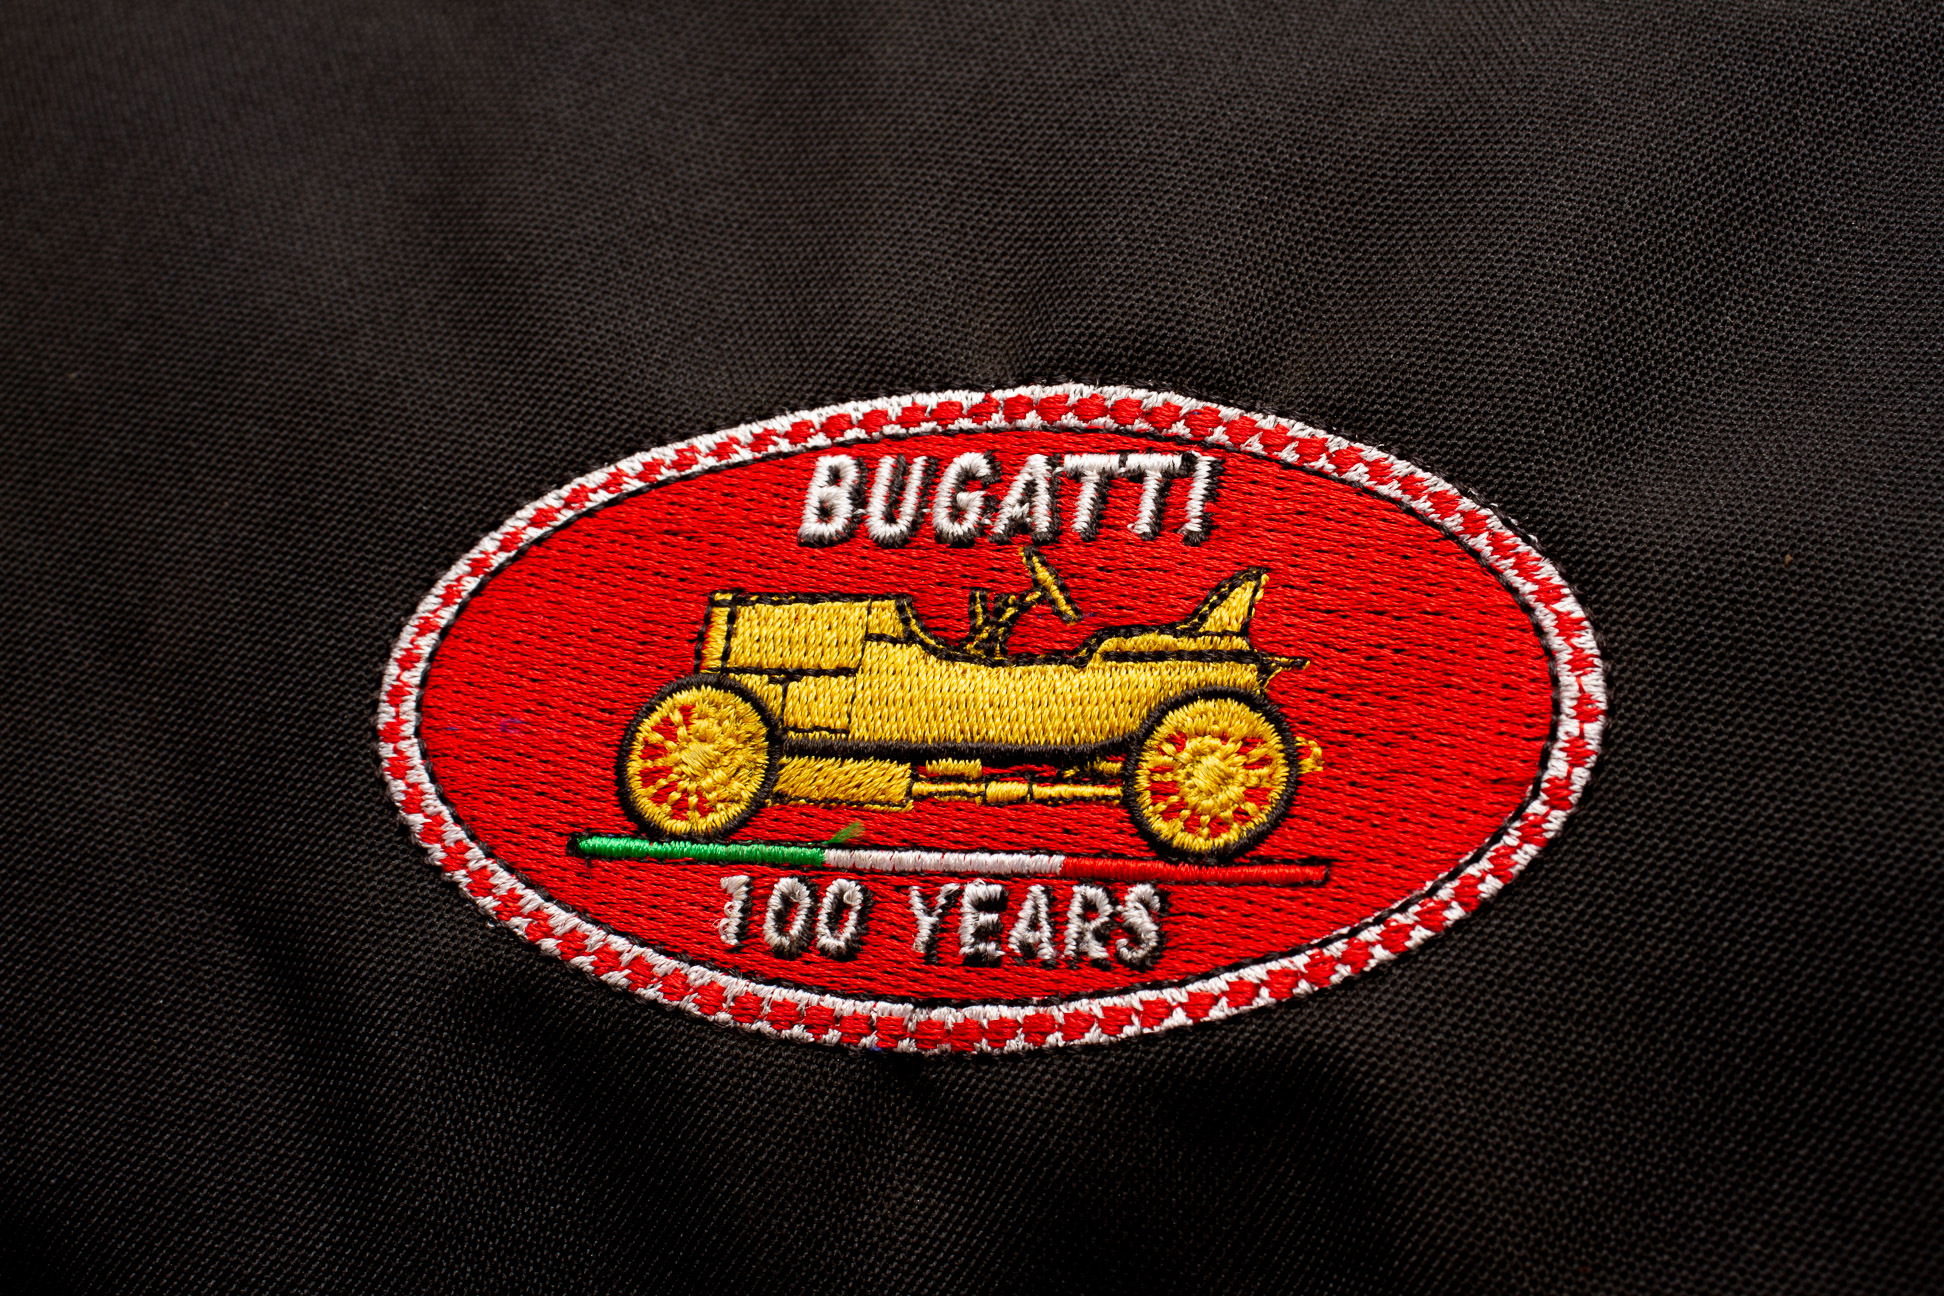 A BALENCIAGA / BUGATTI 100 YEARS BLACK DRAWSTRING DUFFLE BAG - Image 4 of 6